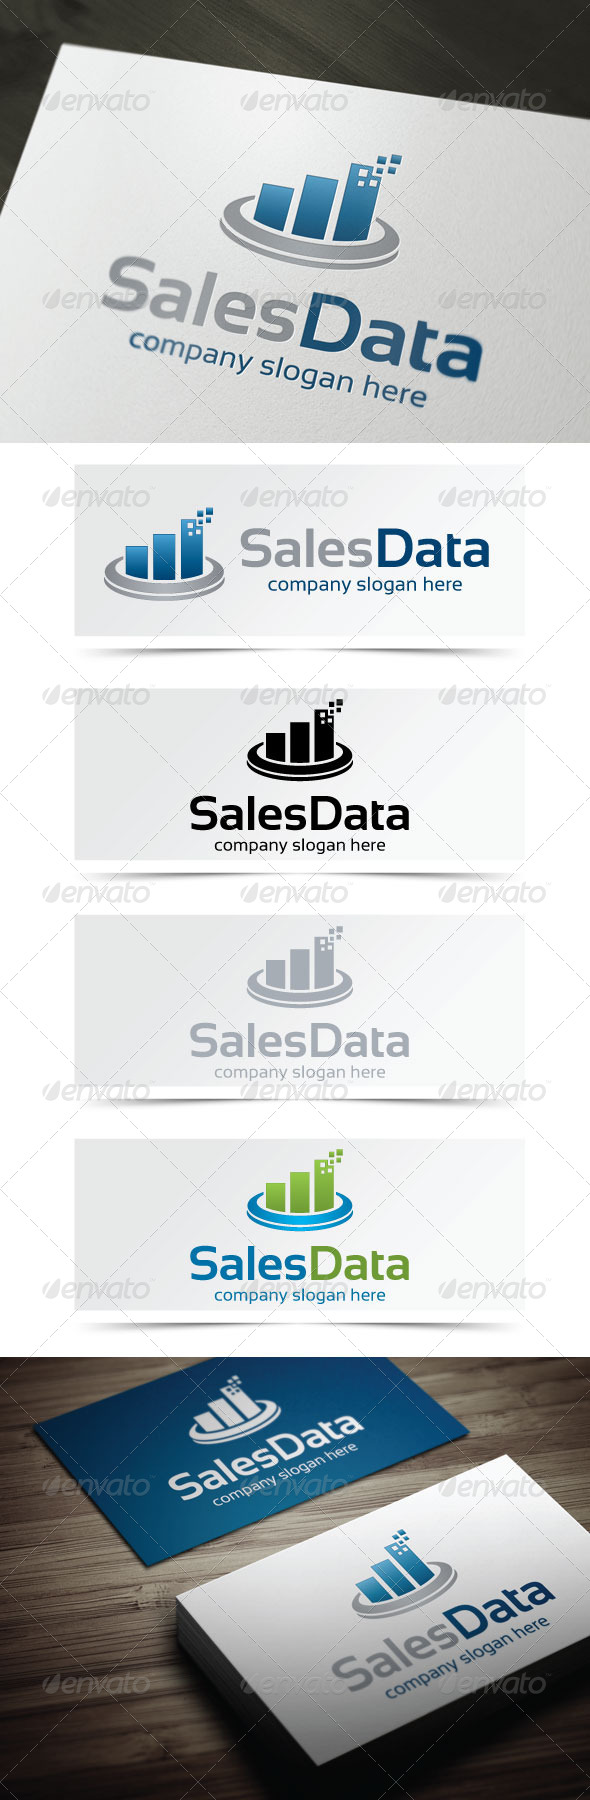 Sales Data